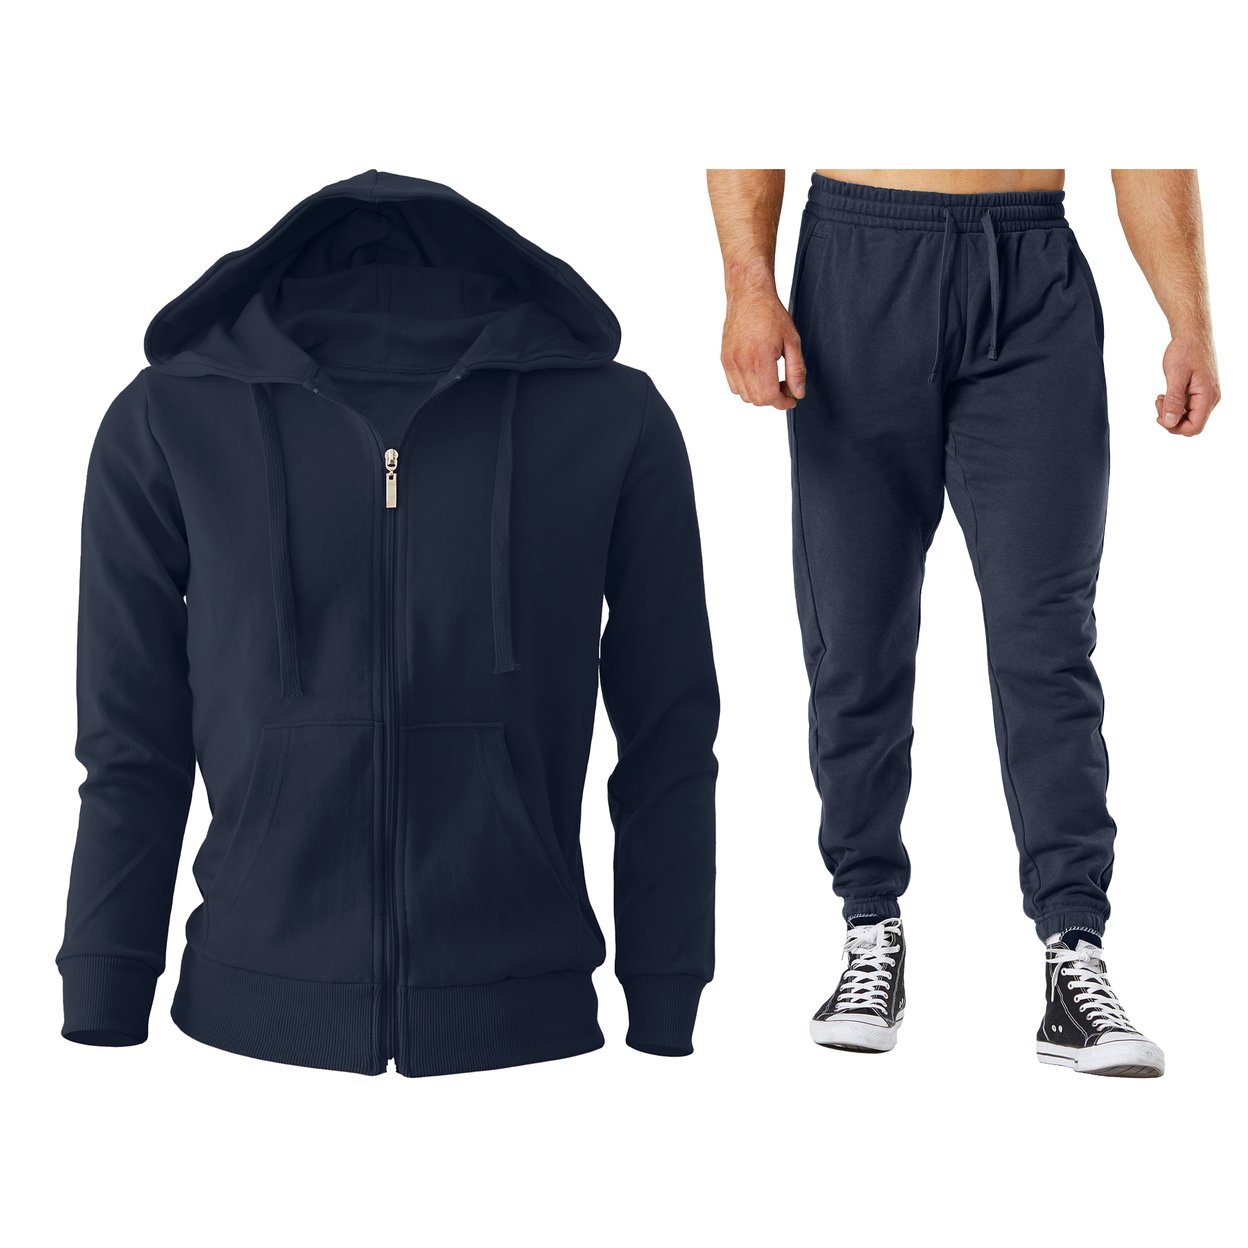 4-Piece: Men's Winter Warm Cozy Athletic Multi-Pockets BIG & TALL Sweatsuit Set - Navy, X-large